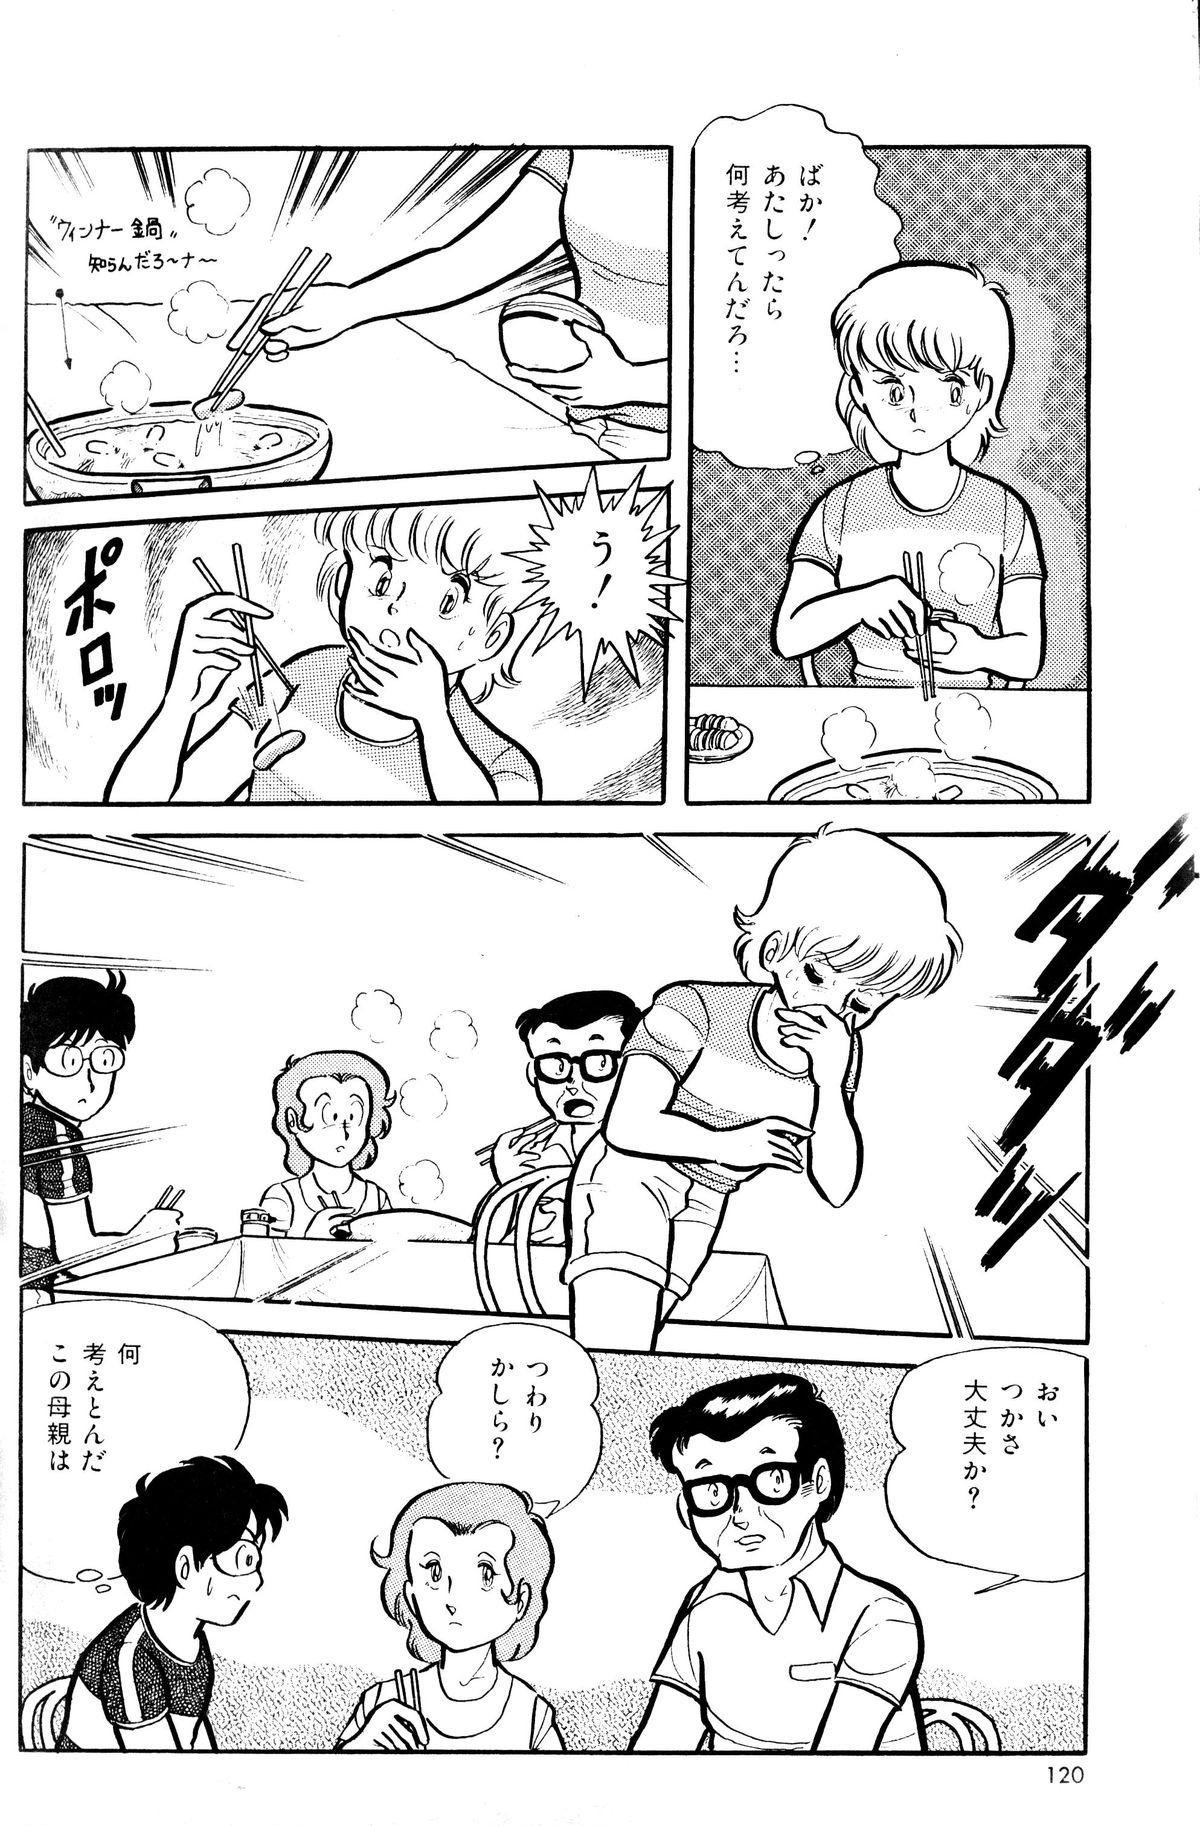 Melon Comic No. 01, メロンコミック 昭和59年6月号 121